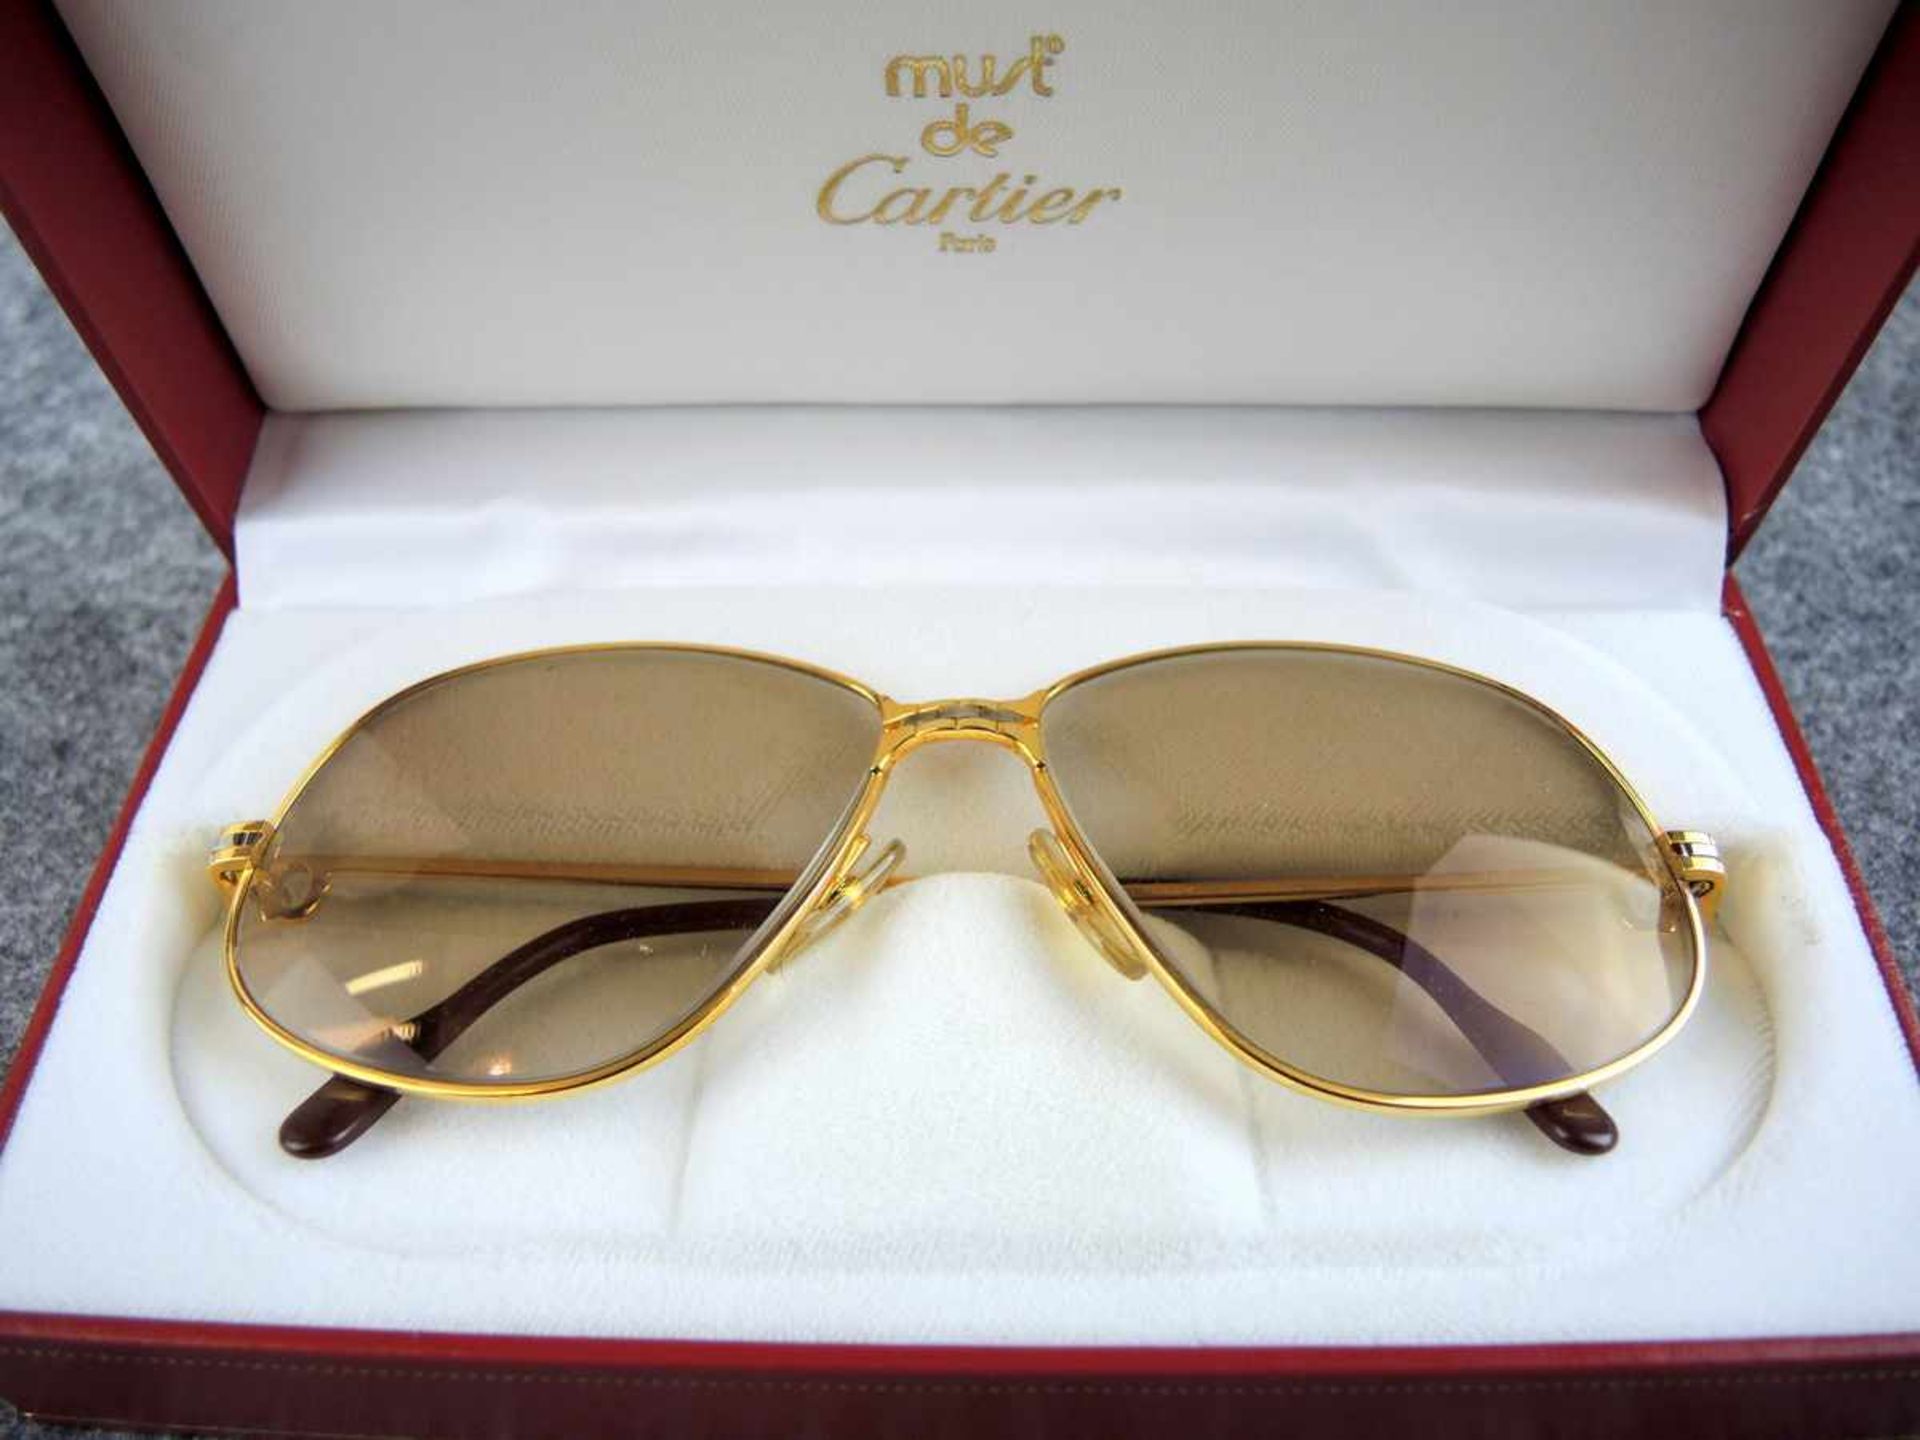 Cartier Sonnenbrille In originaler Schachtel.